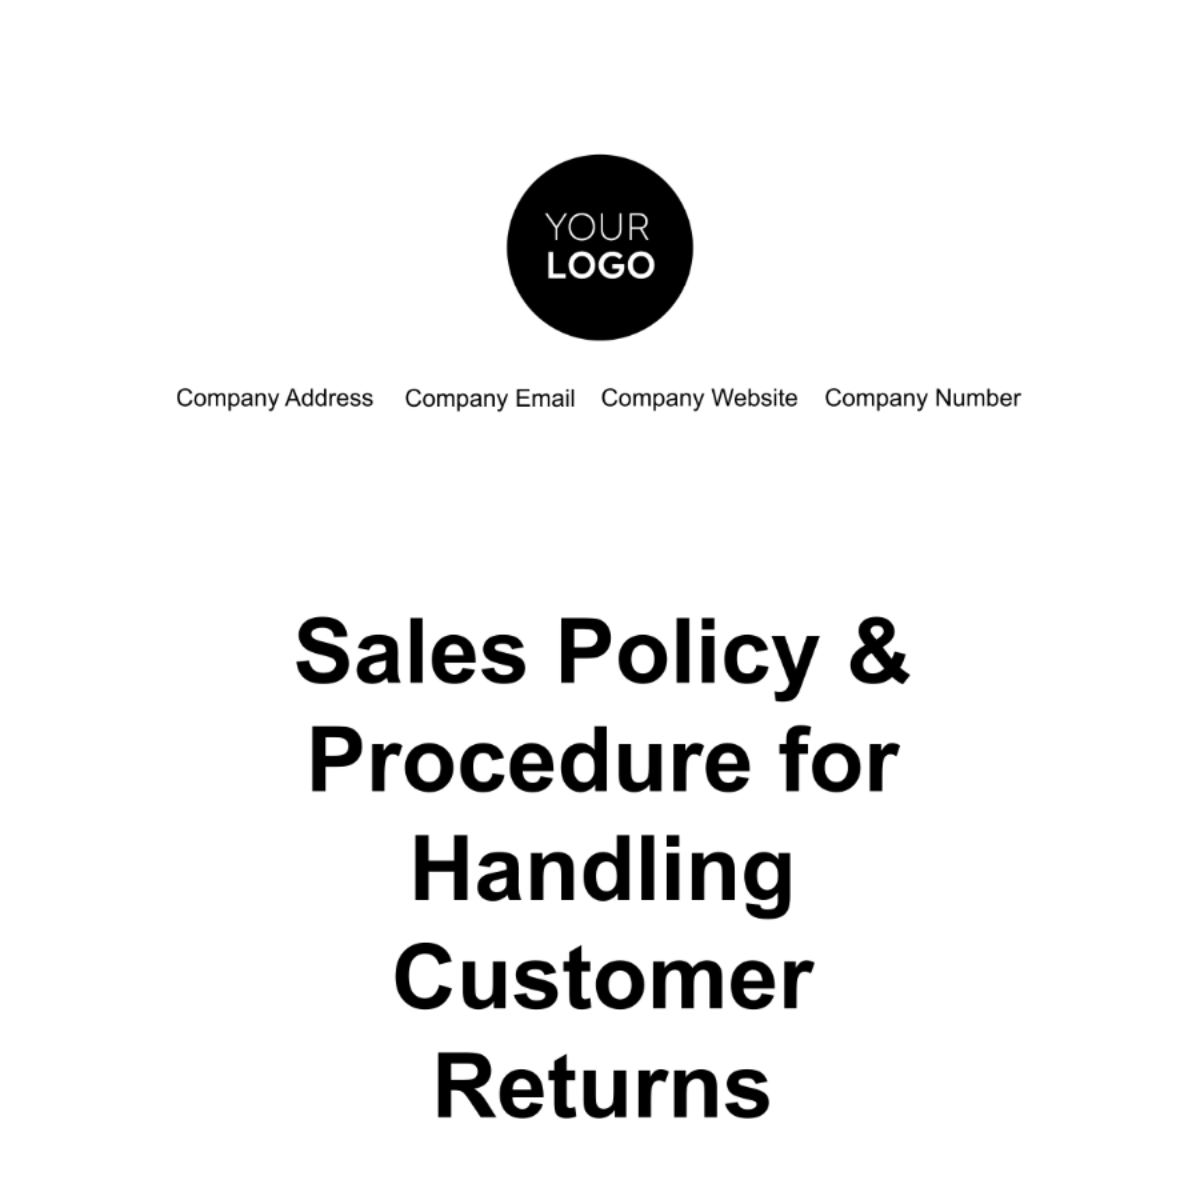 Sales Policy & Procedure for Handling Customer Returns Template